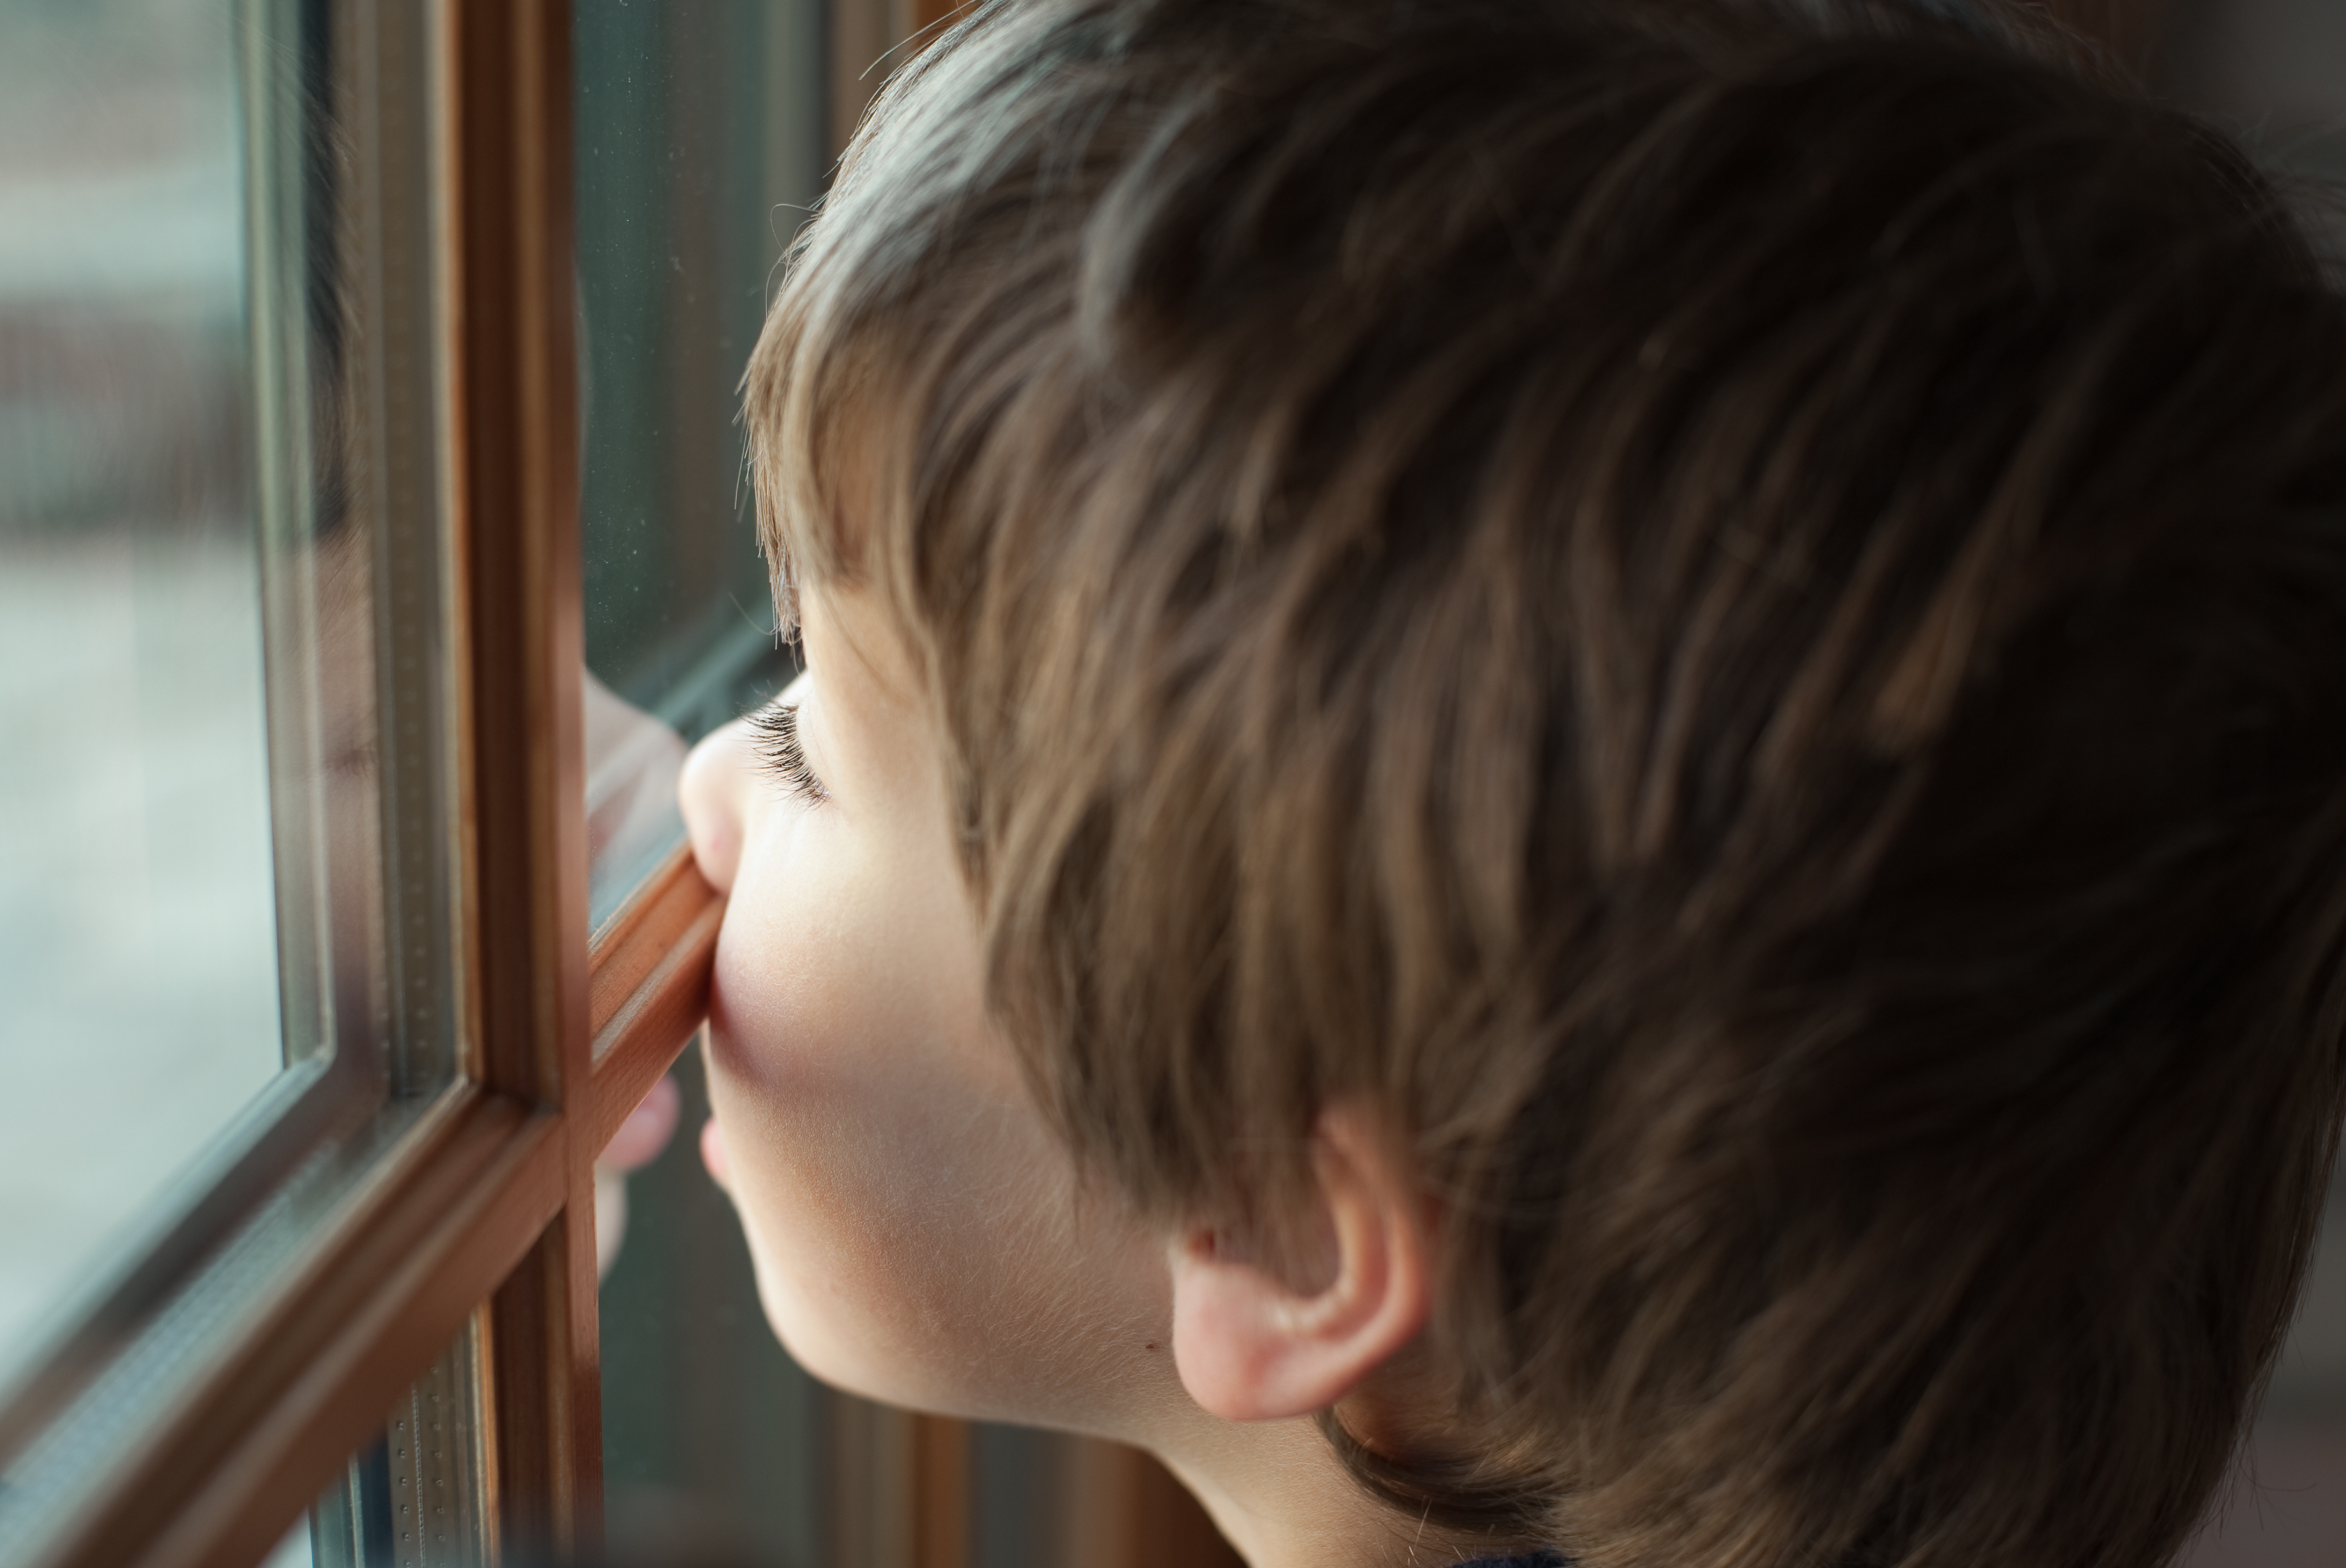 Boy presses his nose against window